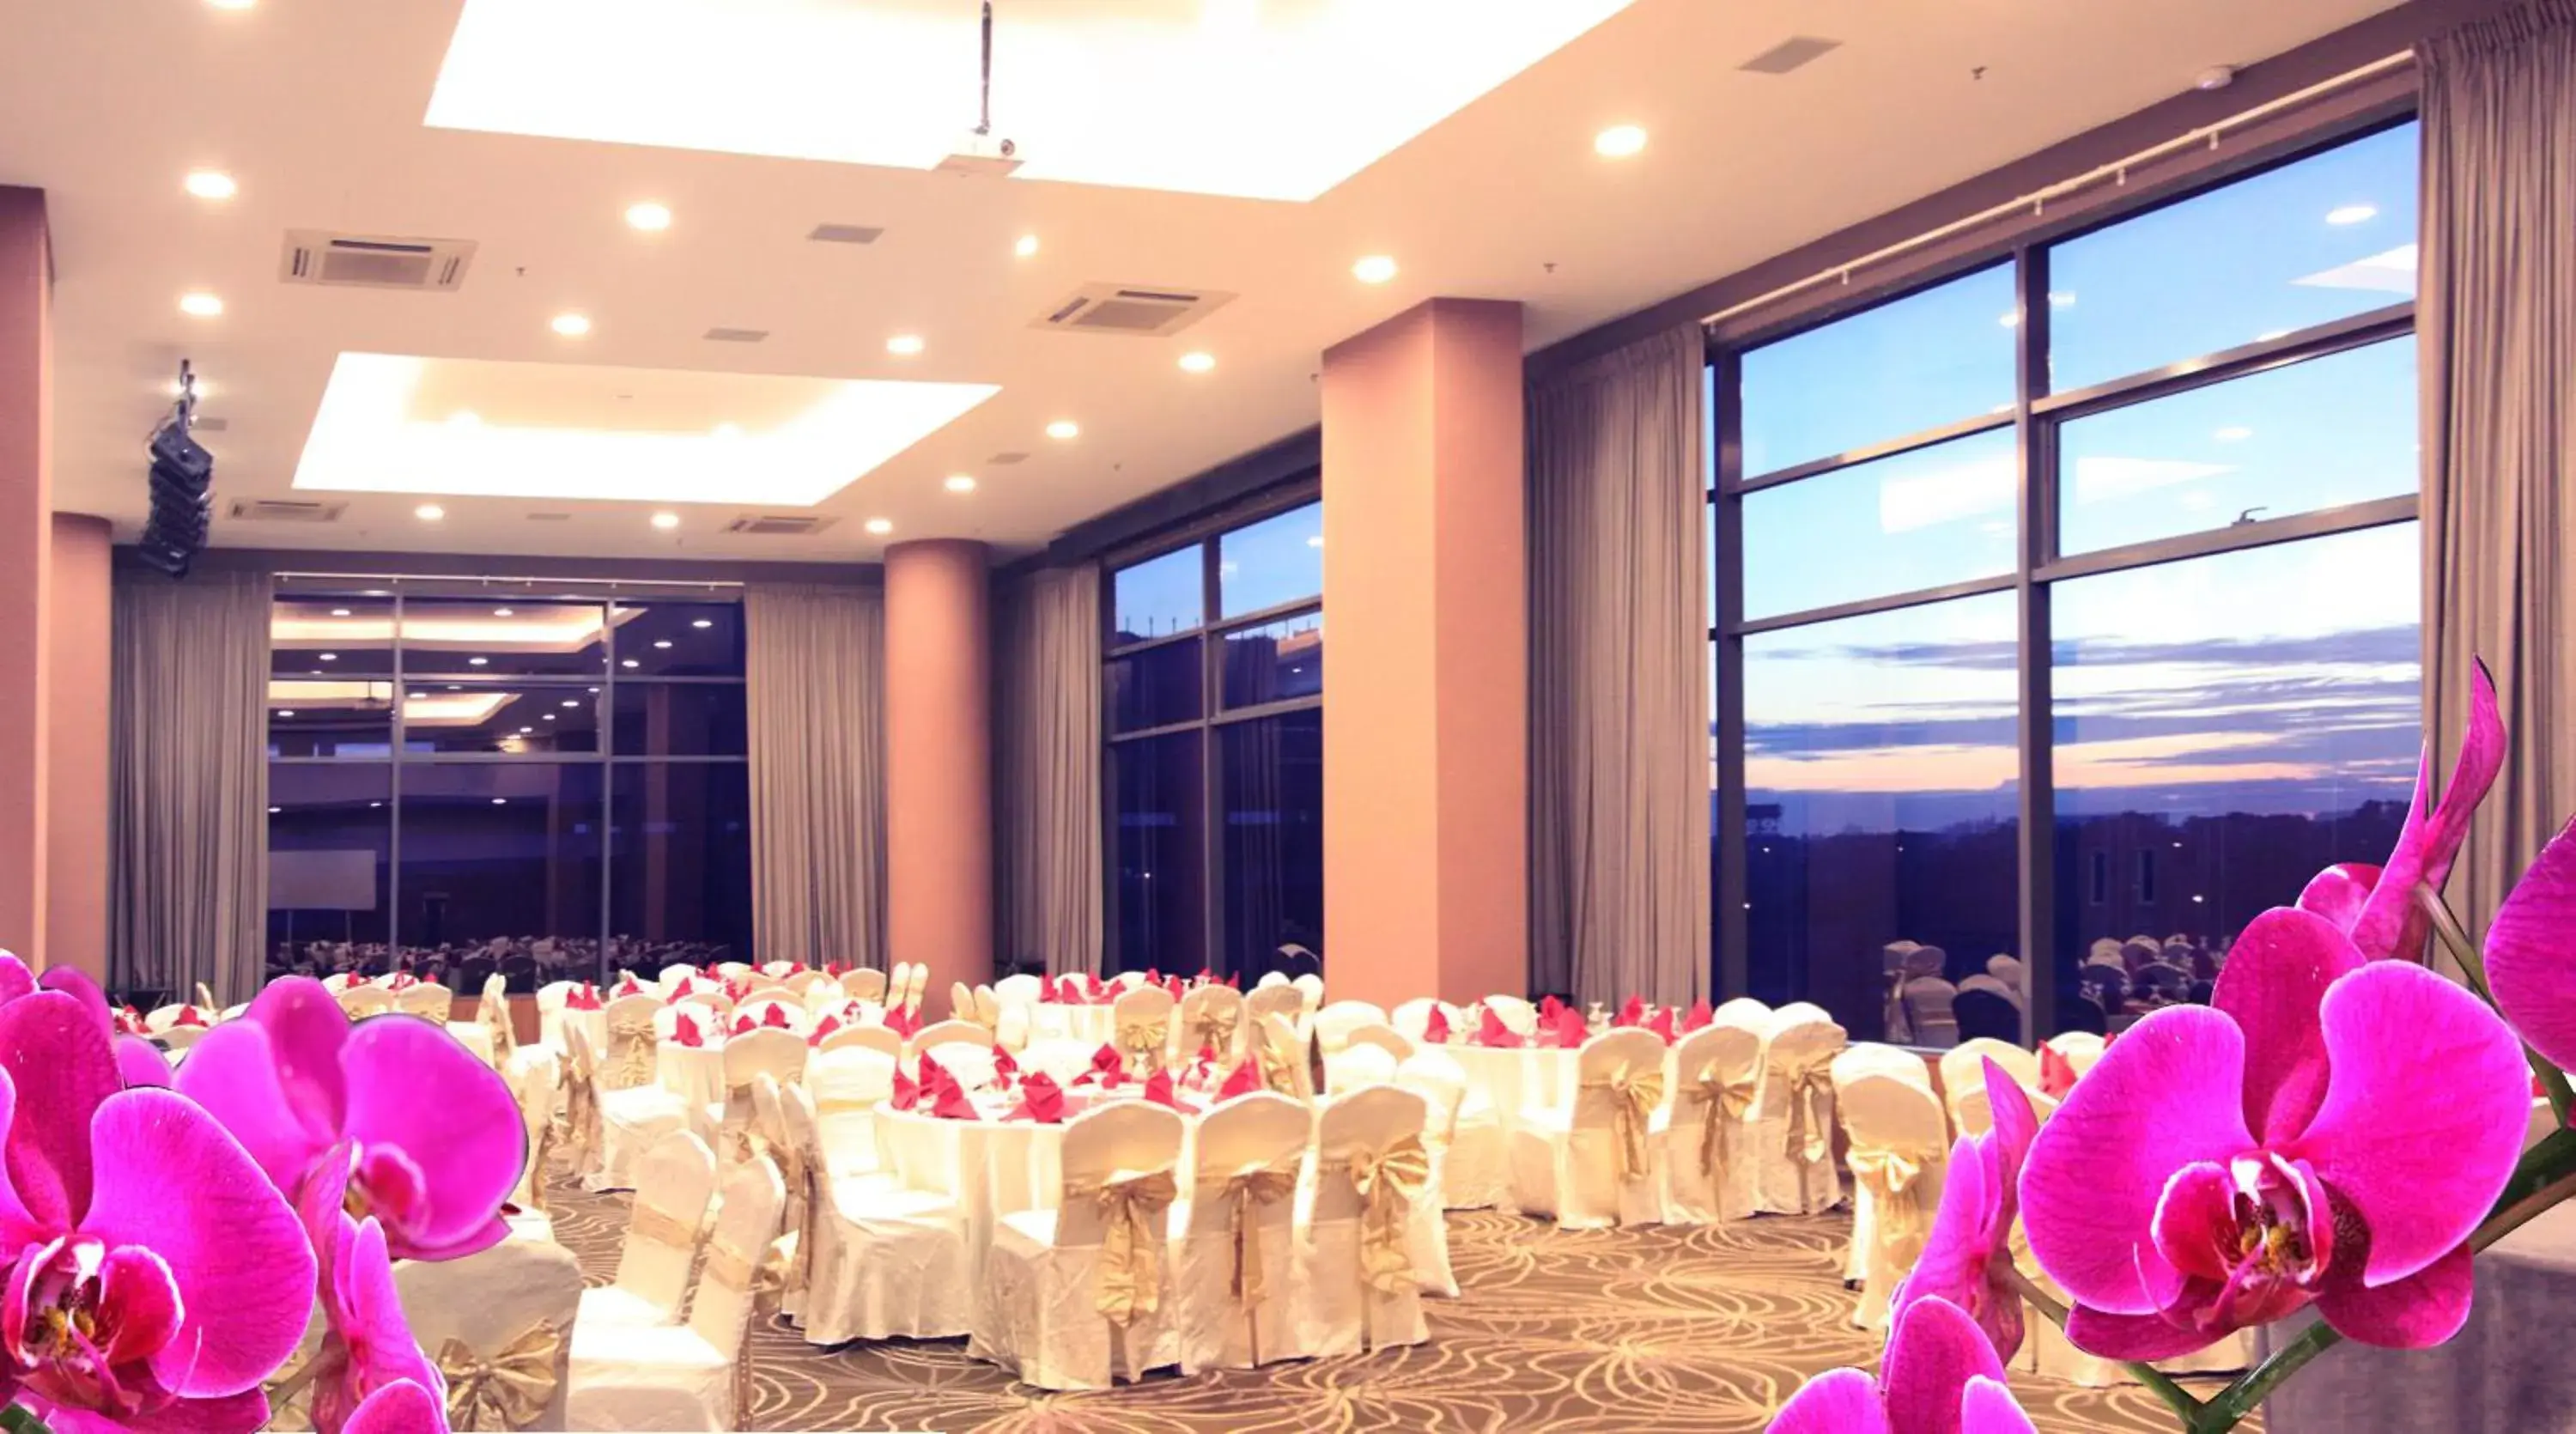 Business facilities, Banquet Facilities in Acappella Suite Hotel, Shah Alam